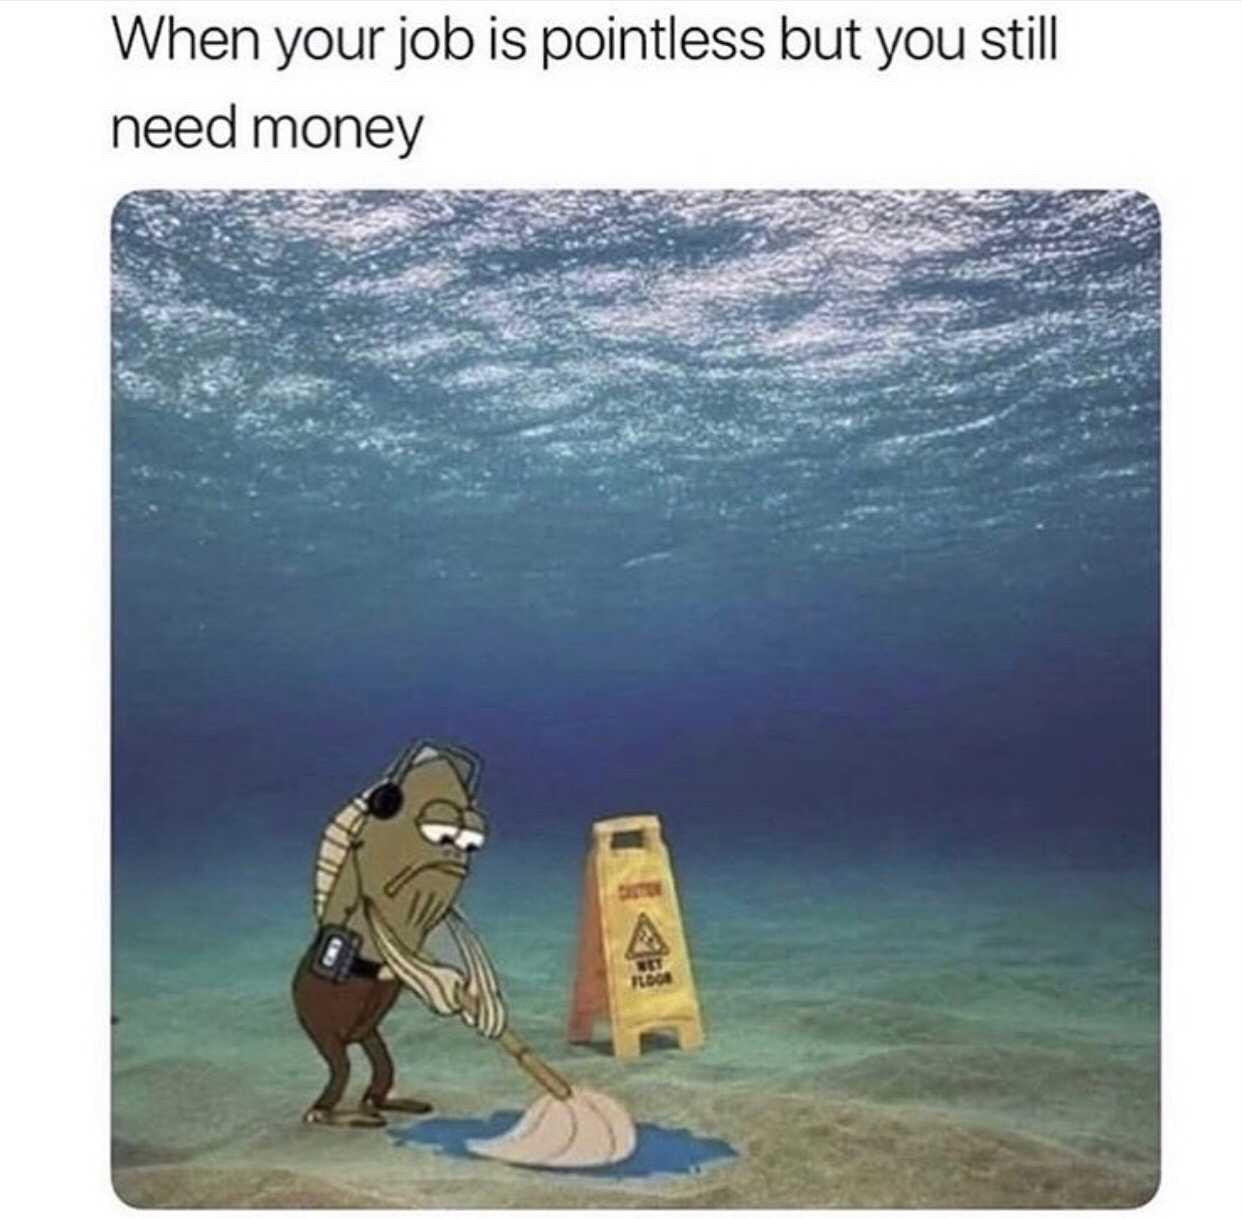 When your job is pointless but you need money Spongebob meme